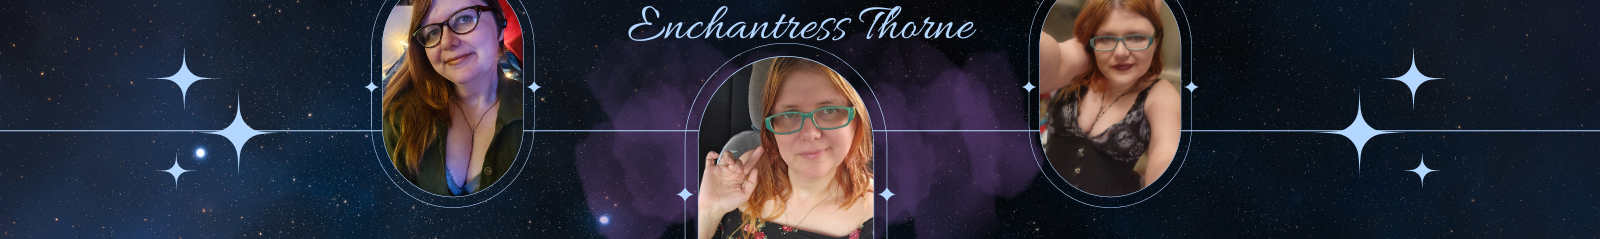 Enchantress Thorne